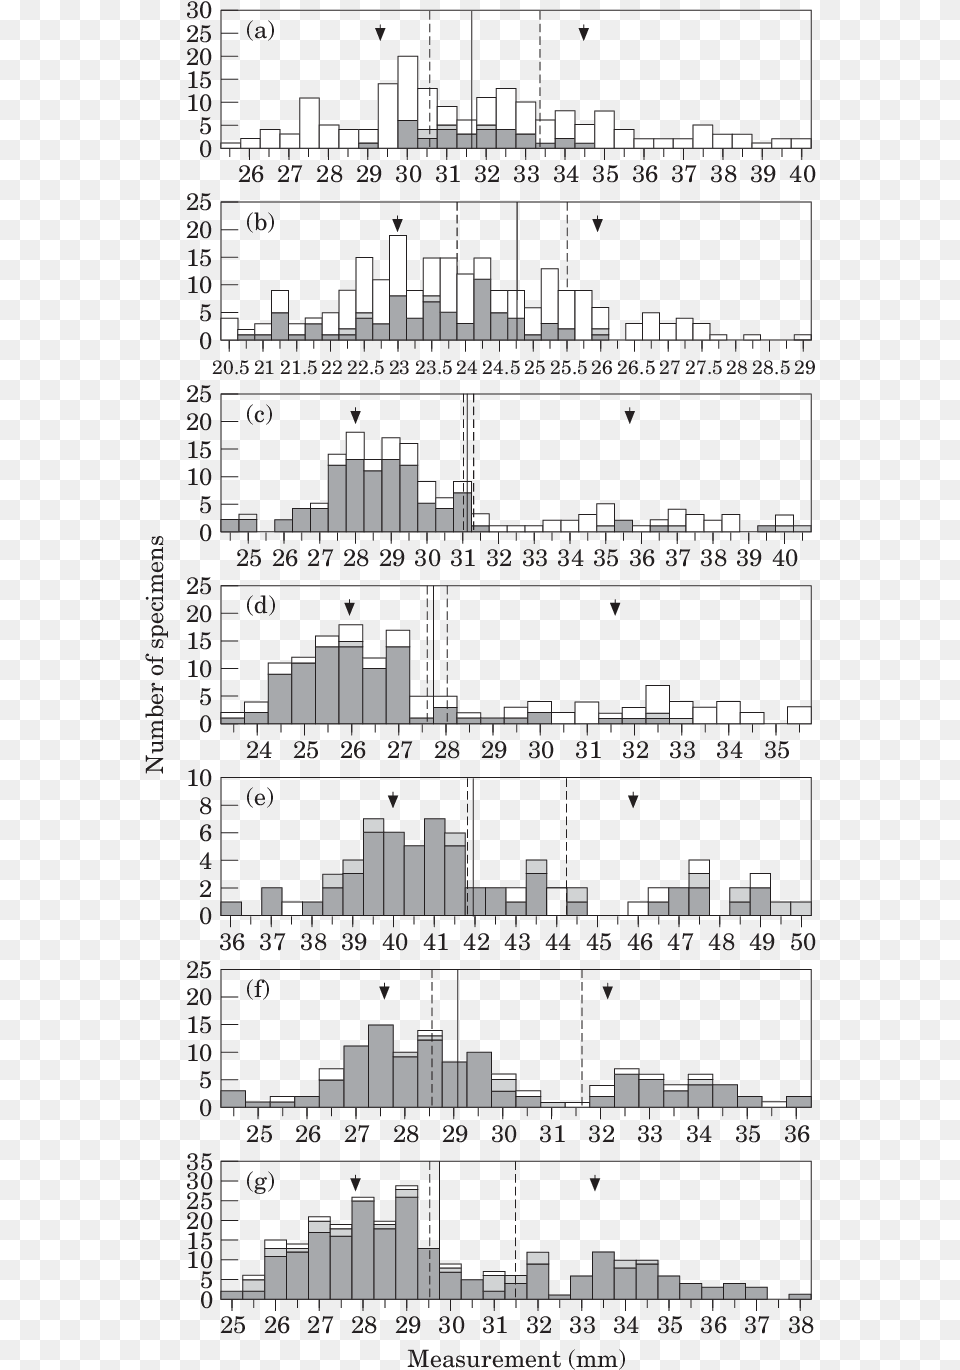 Size Distribution Of Seven Long Bones Diagram, Scoreboard, Chart, Plot Png Image